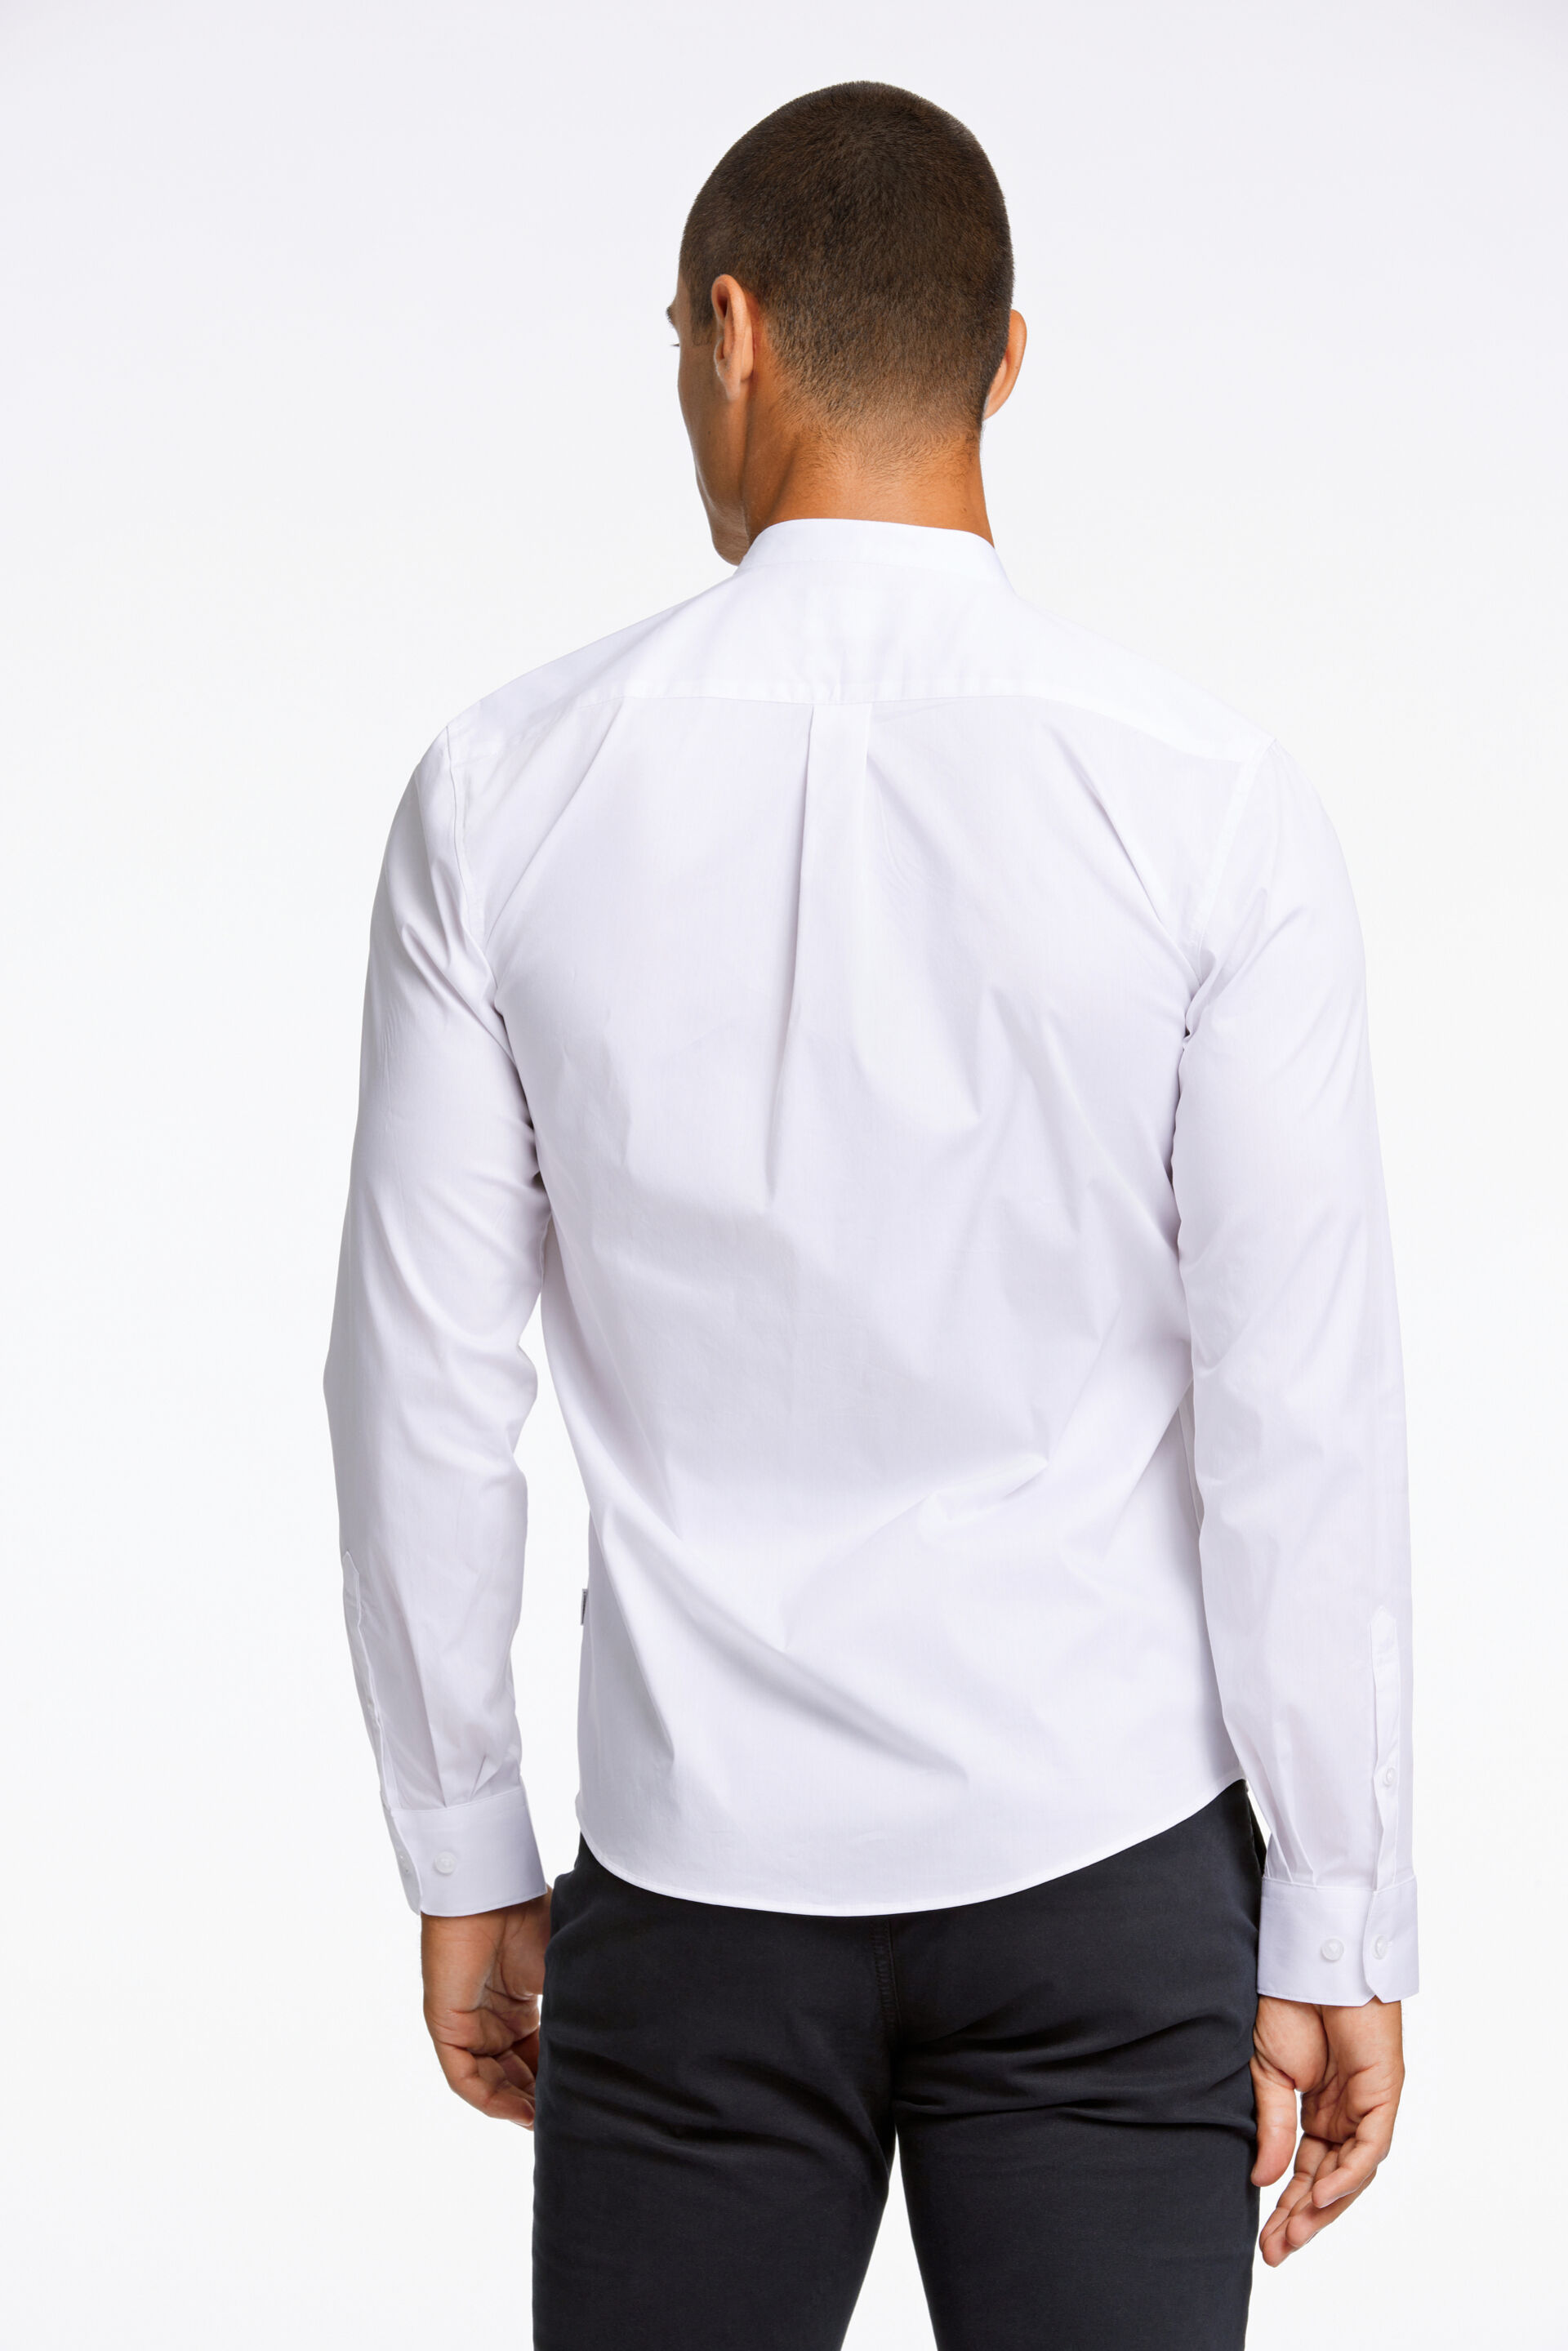 Business casual shirt 30-203172A